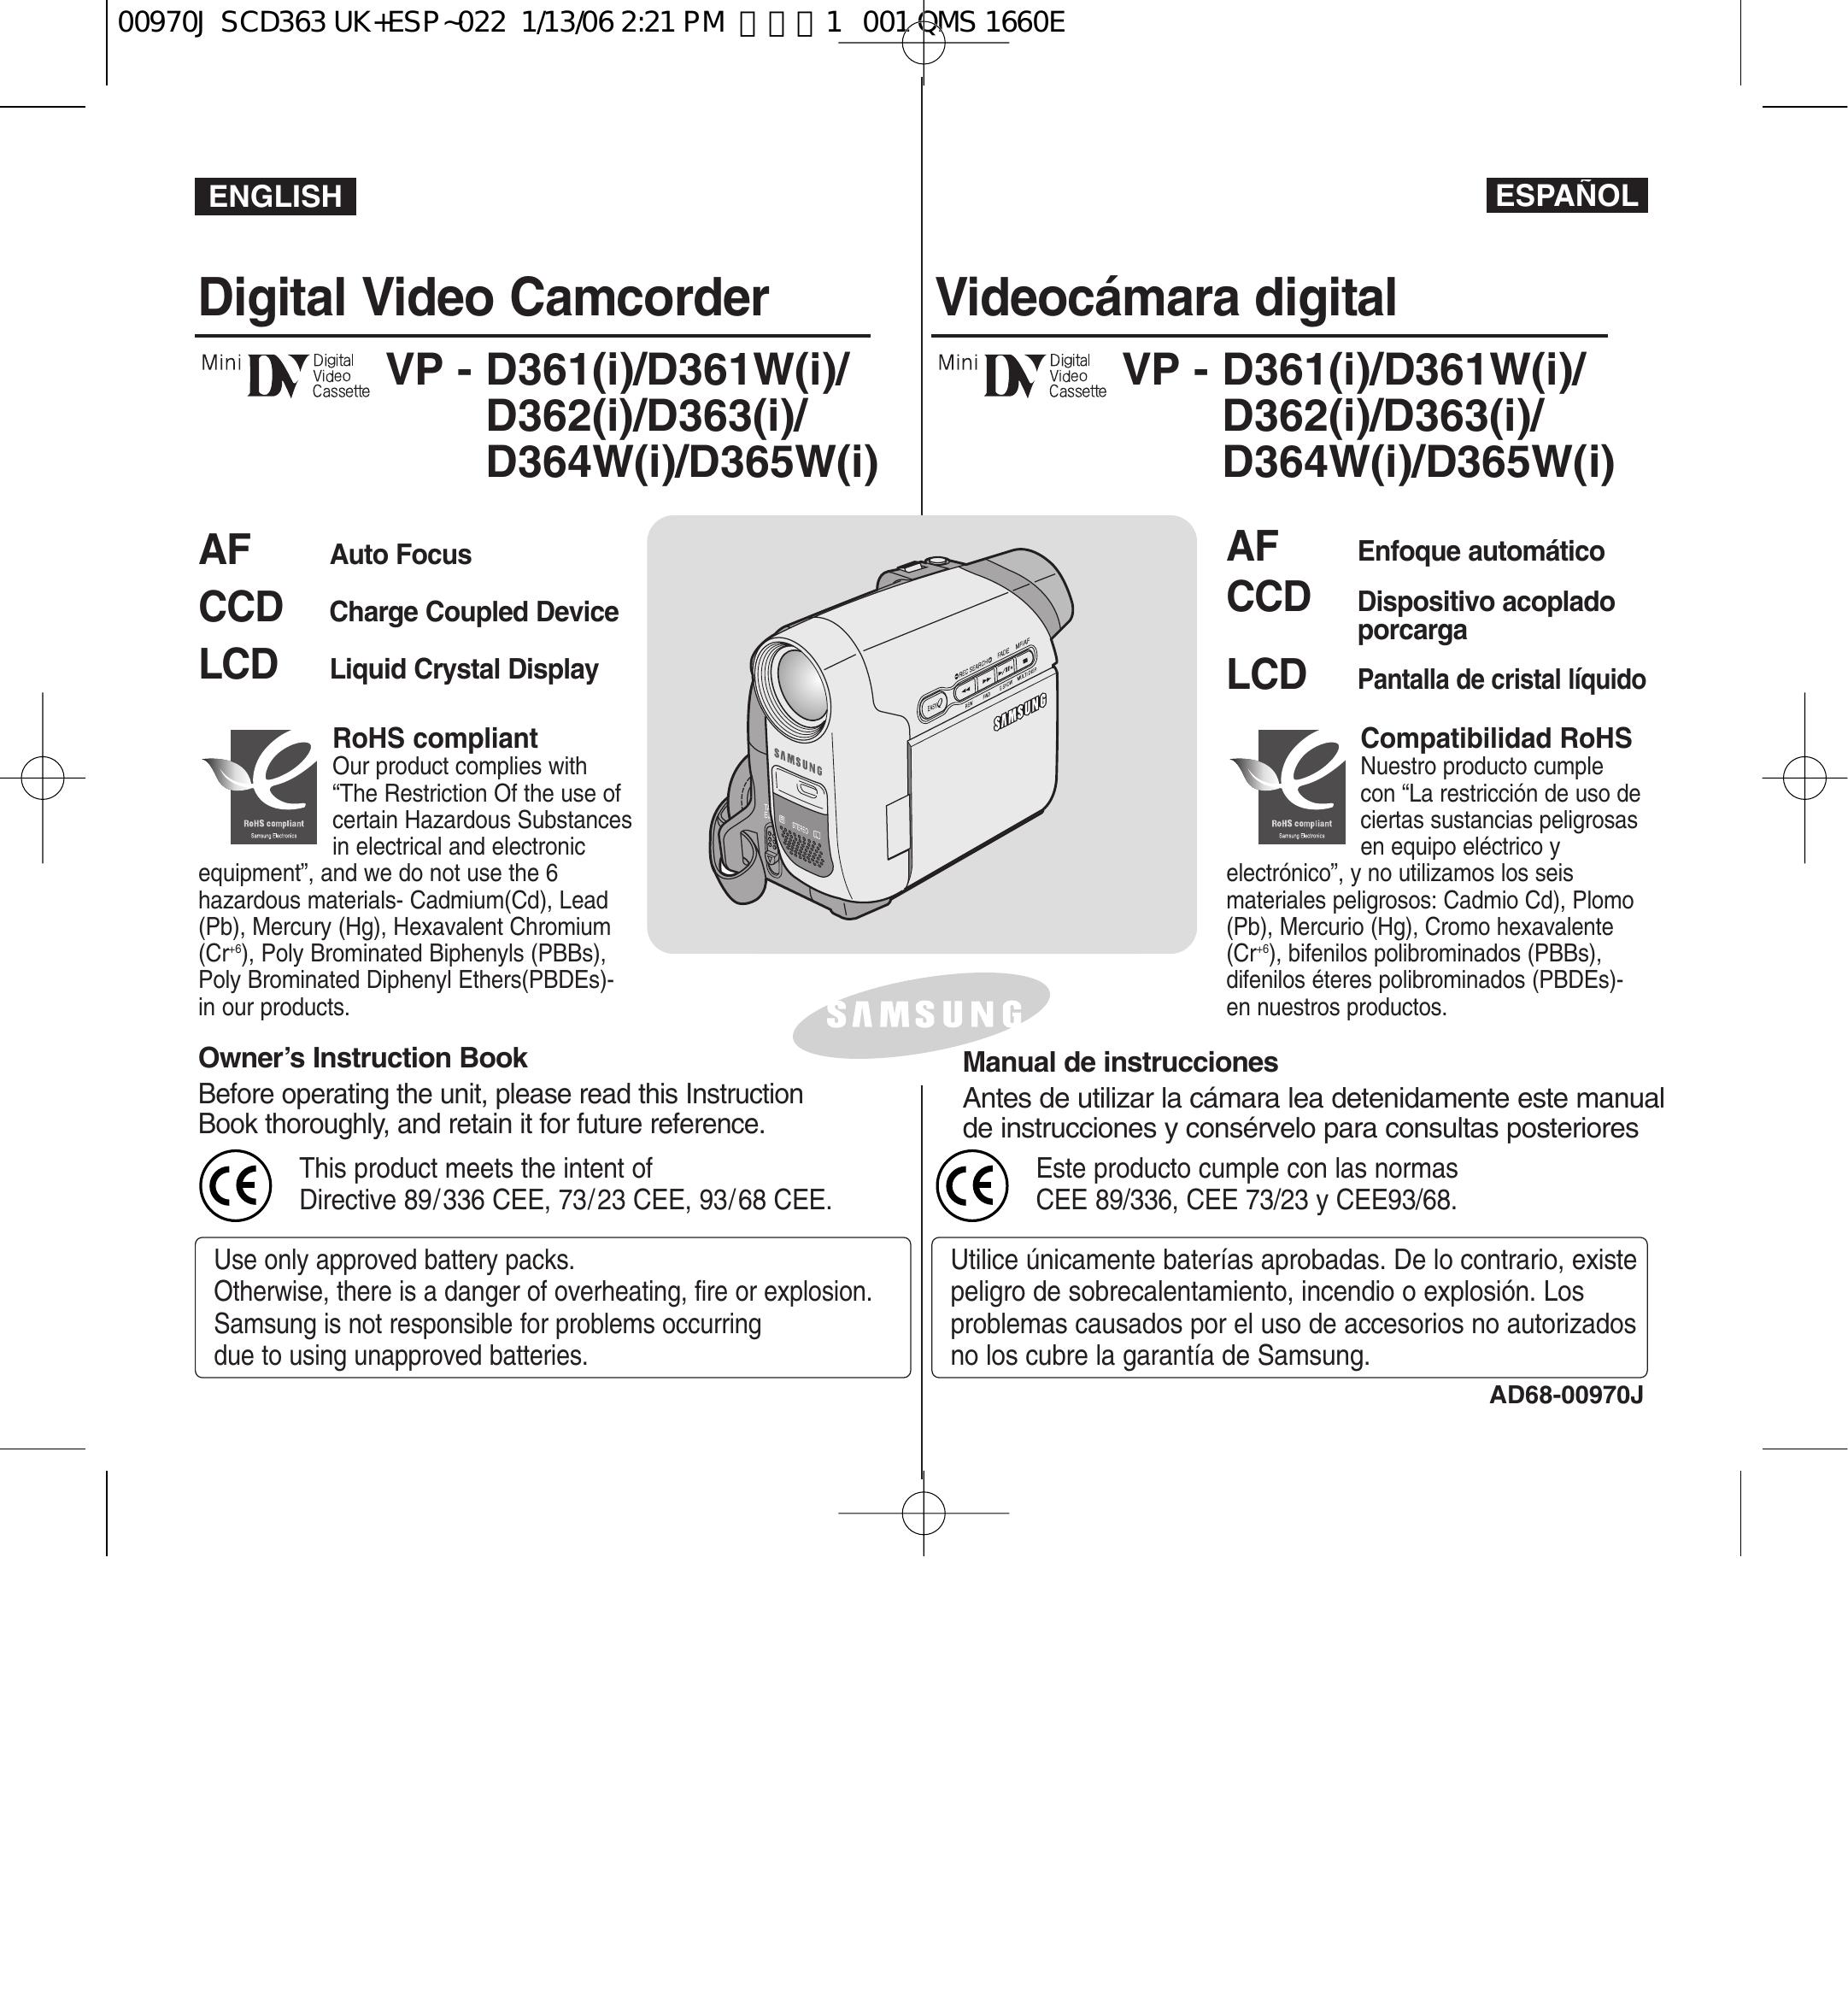 Samsung D365W(I) Camcorder User Manual